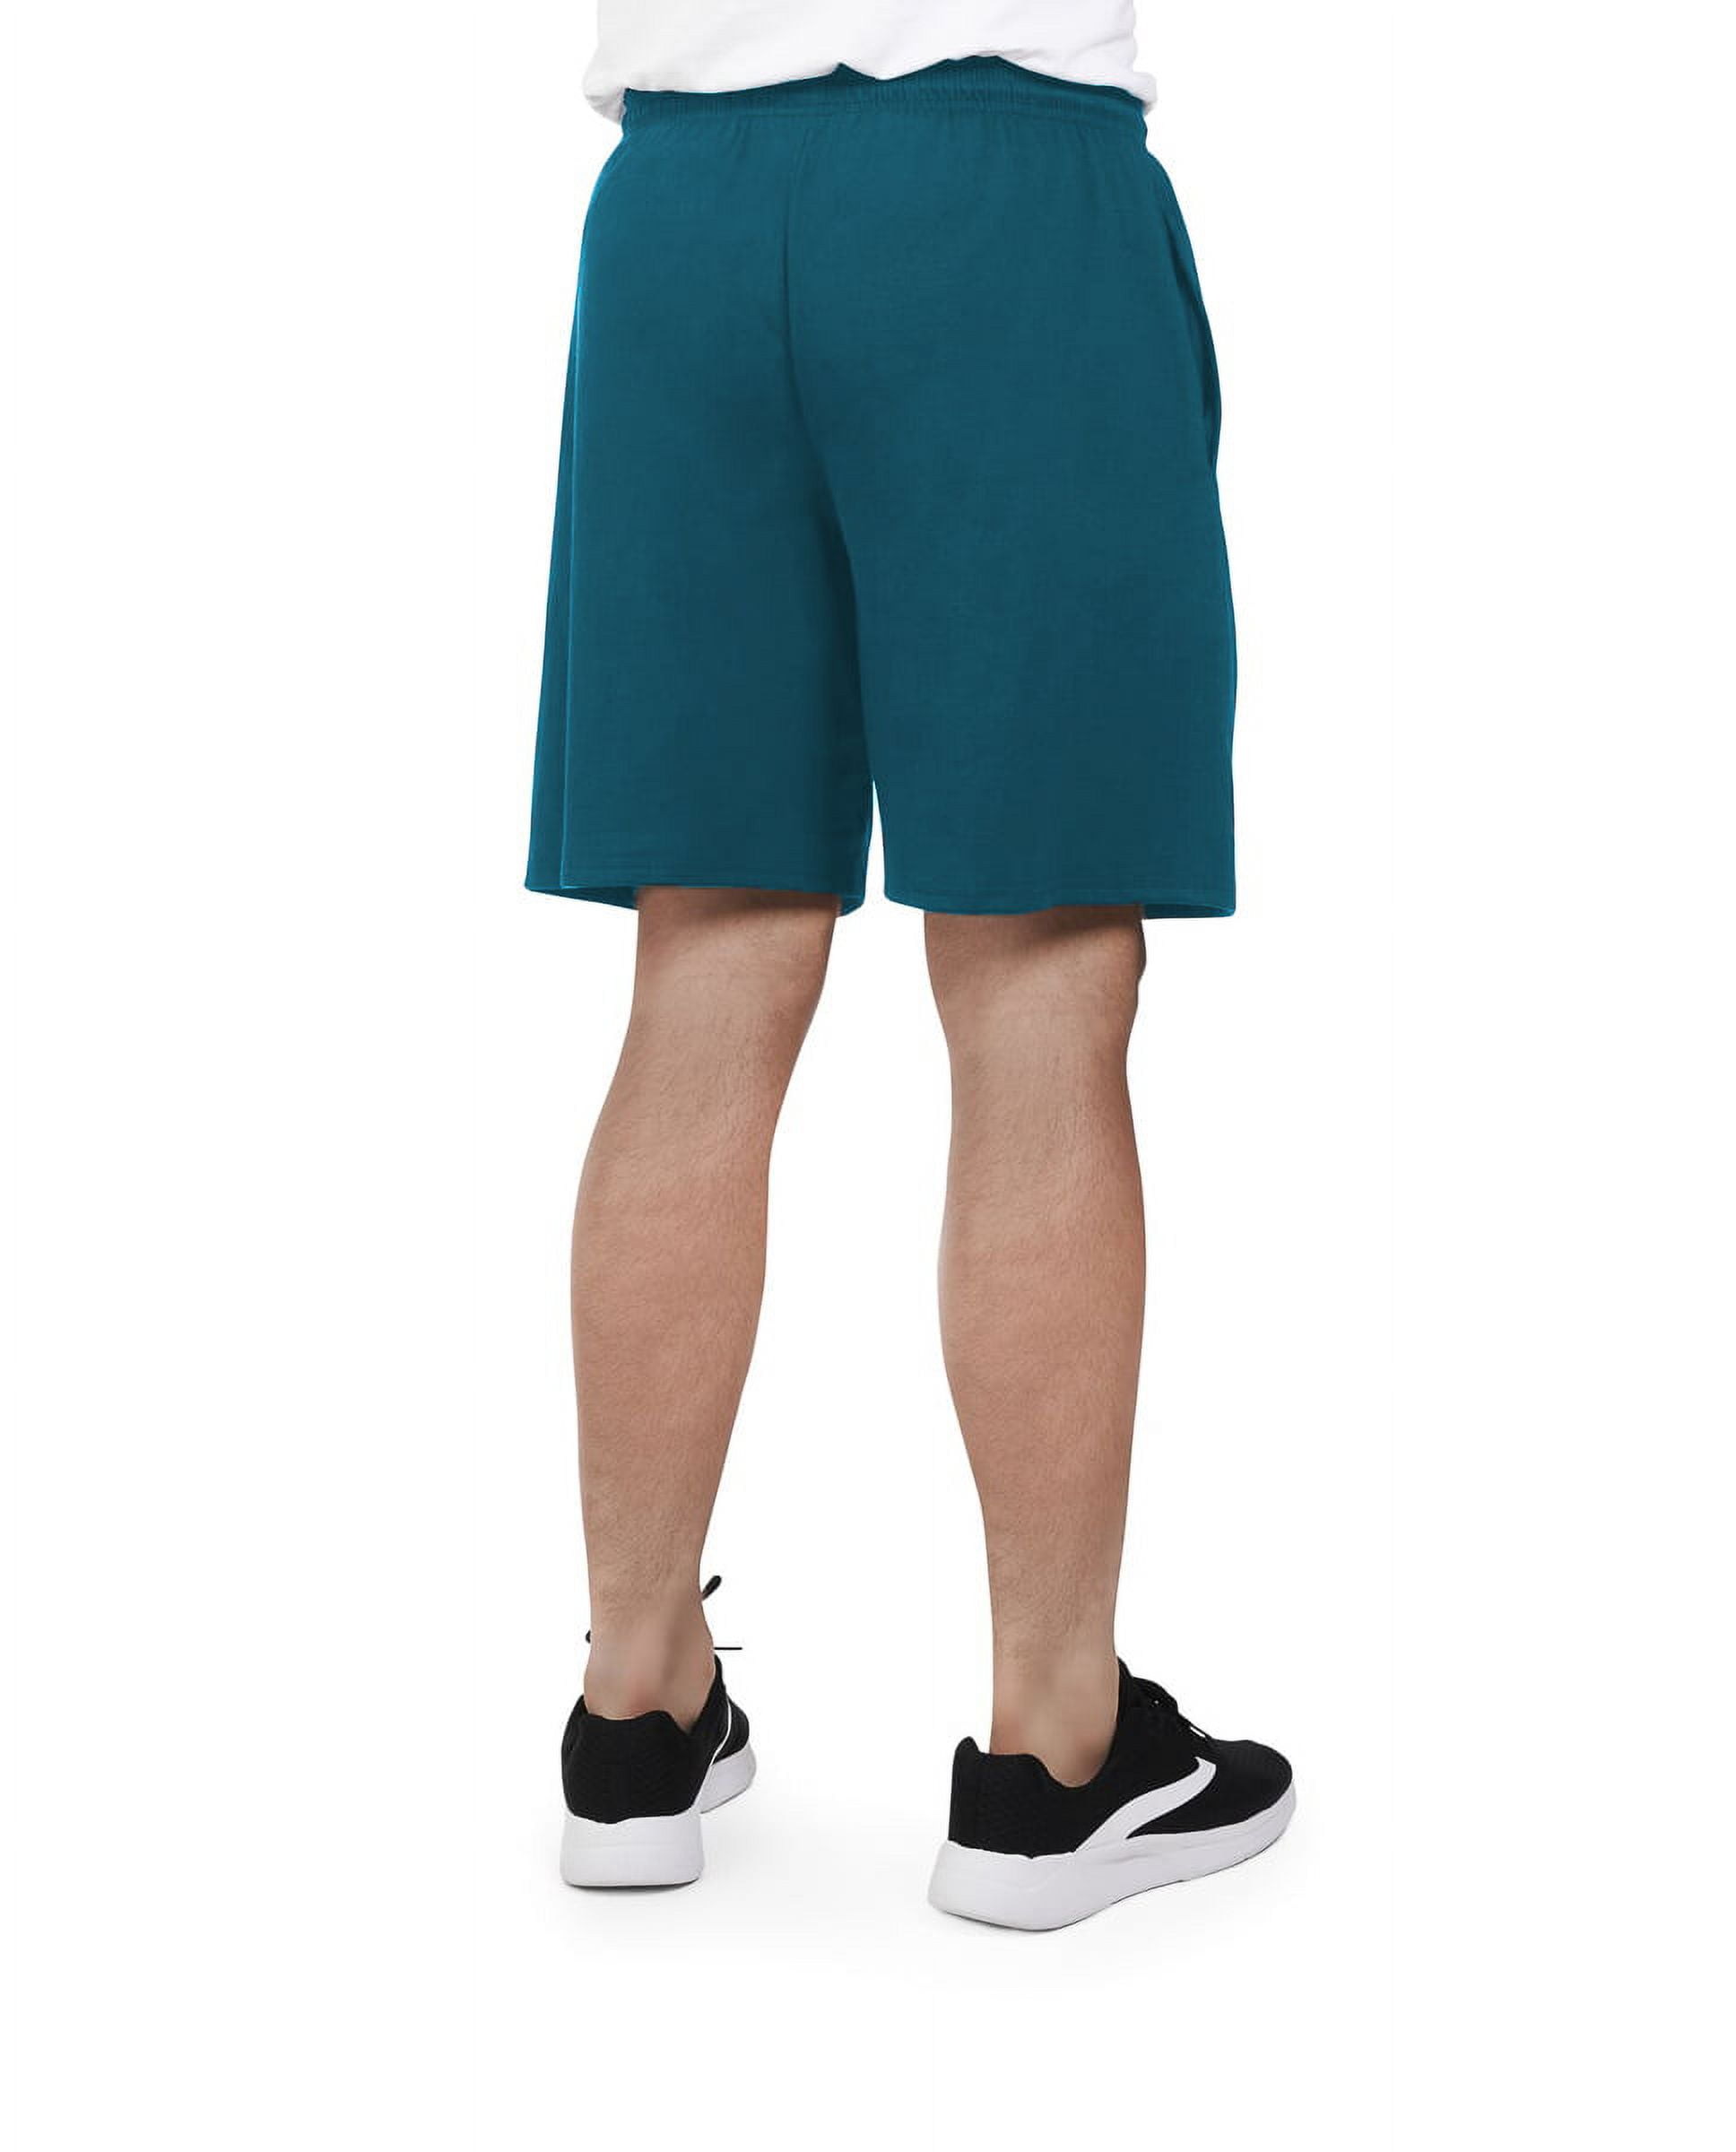 Ready Stock ! Louis Vuitton ! Pure cotton Comfortable Loose Casual Sports  Shorts Seluar Pendek Short Pants Men